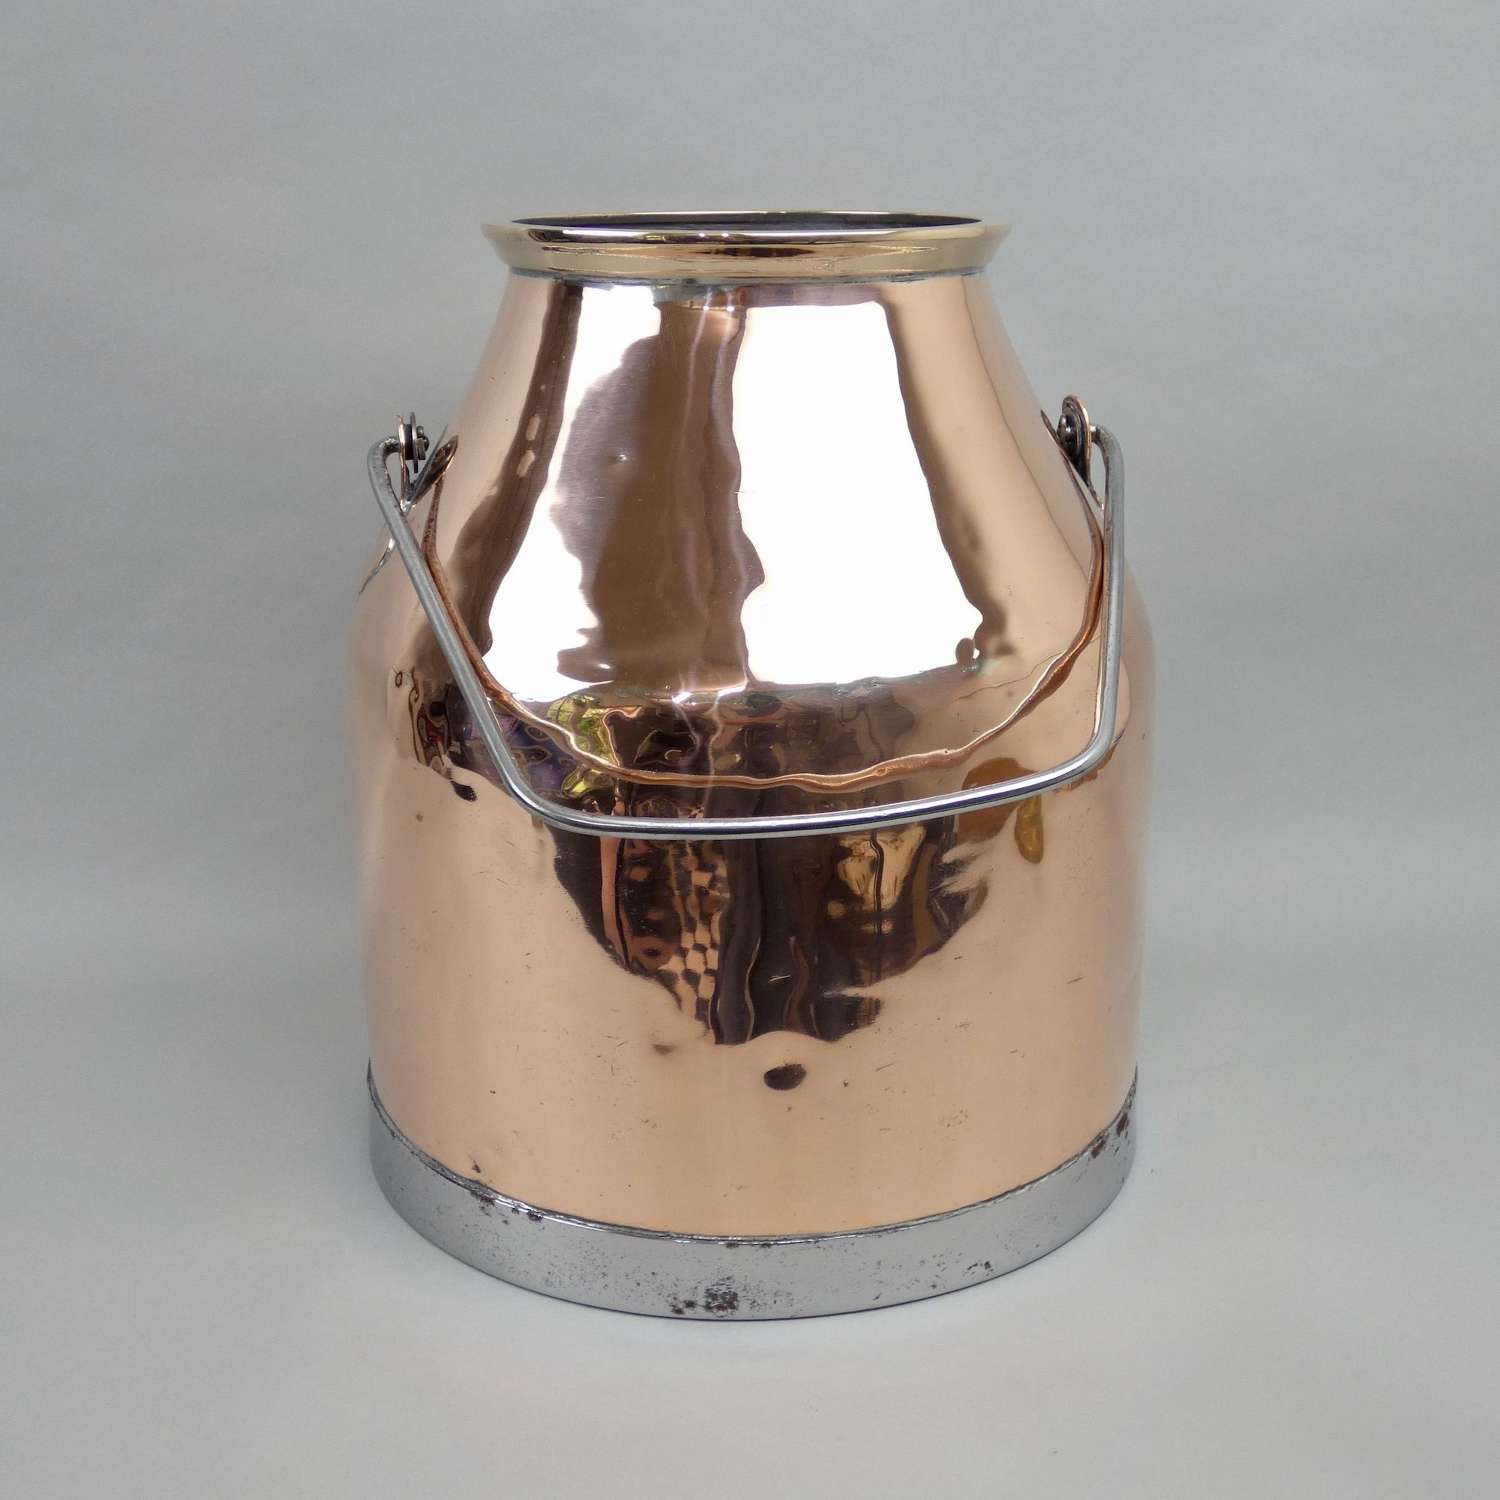 Decorative copper milk churn